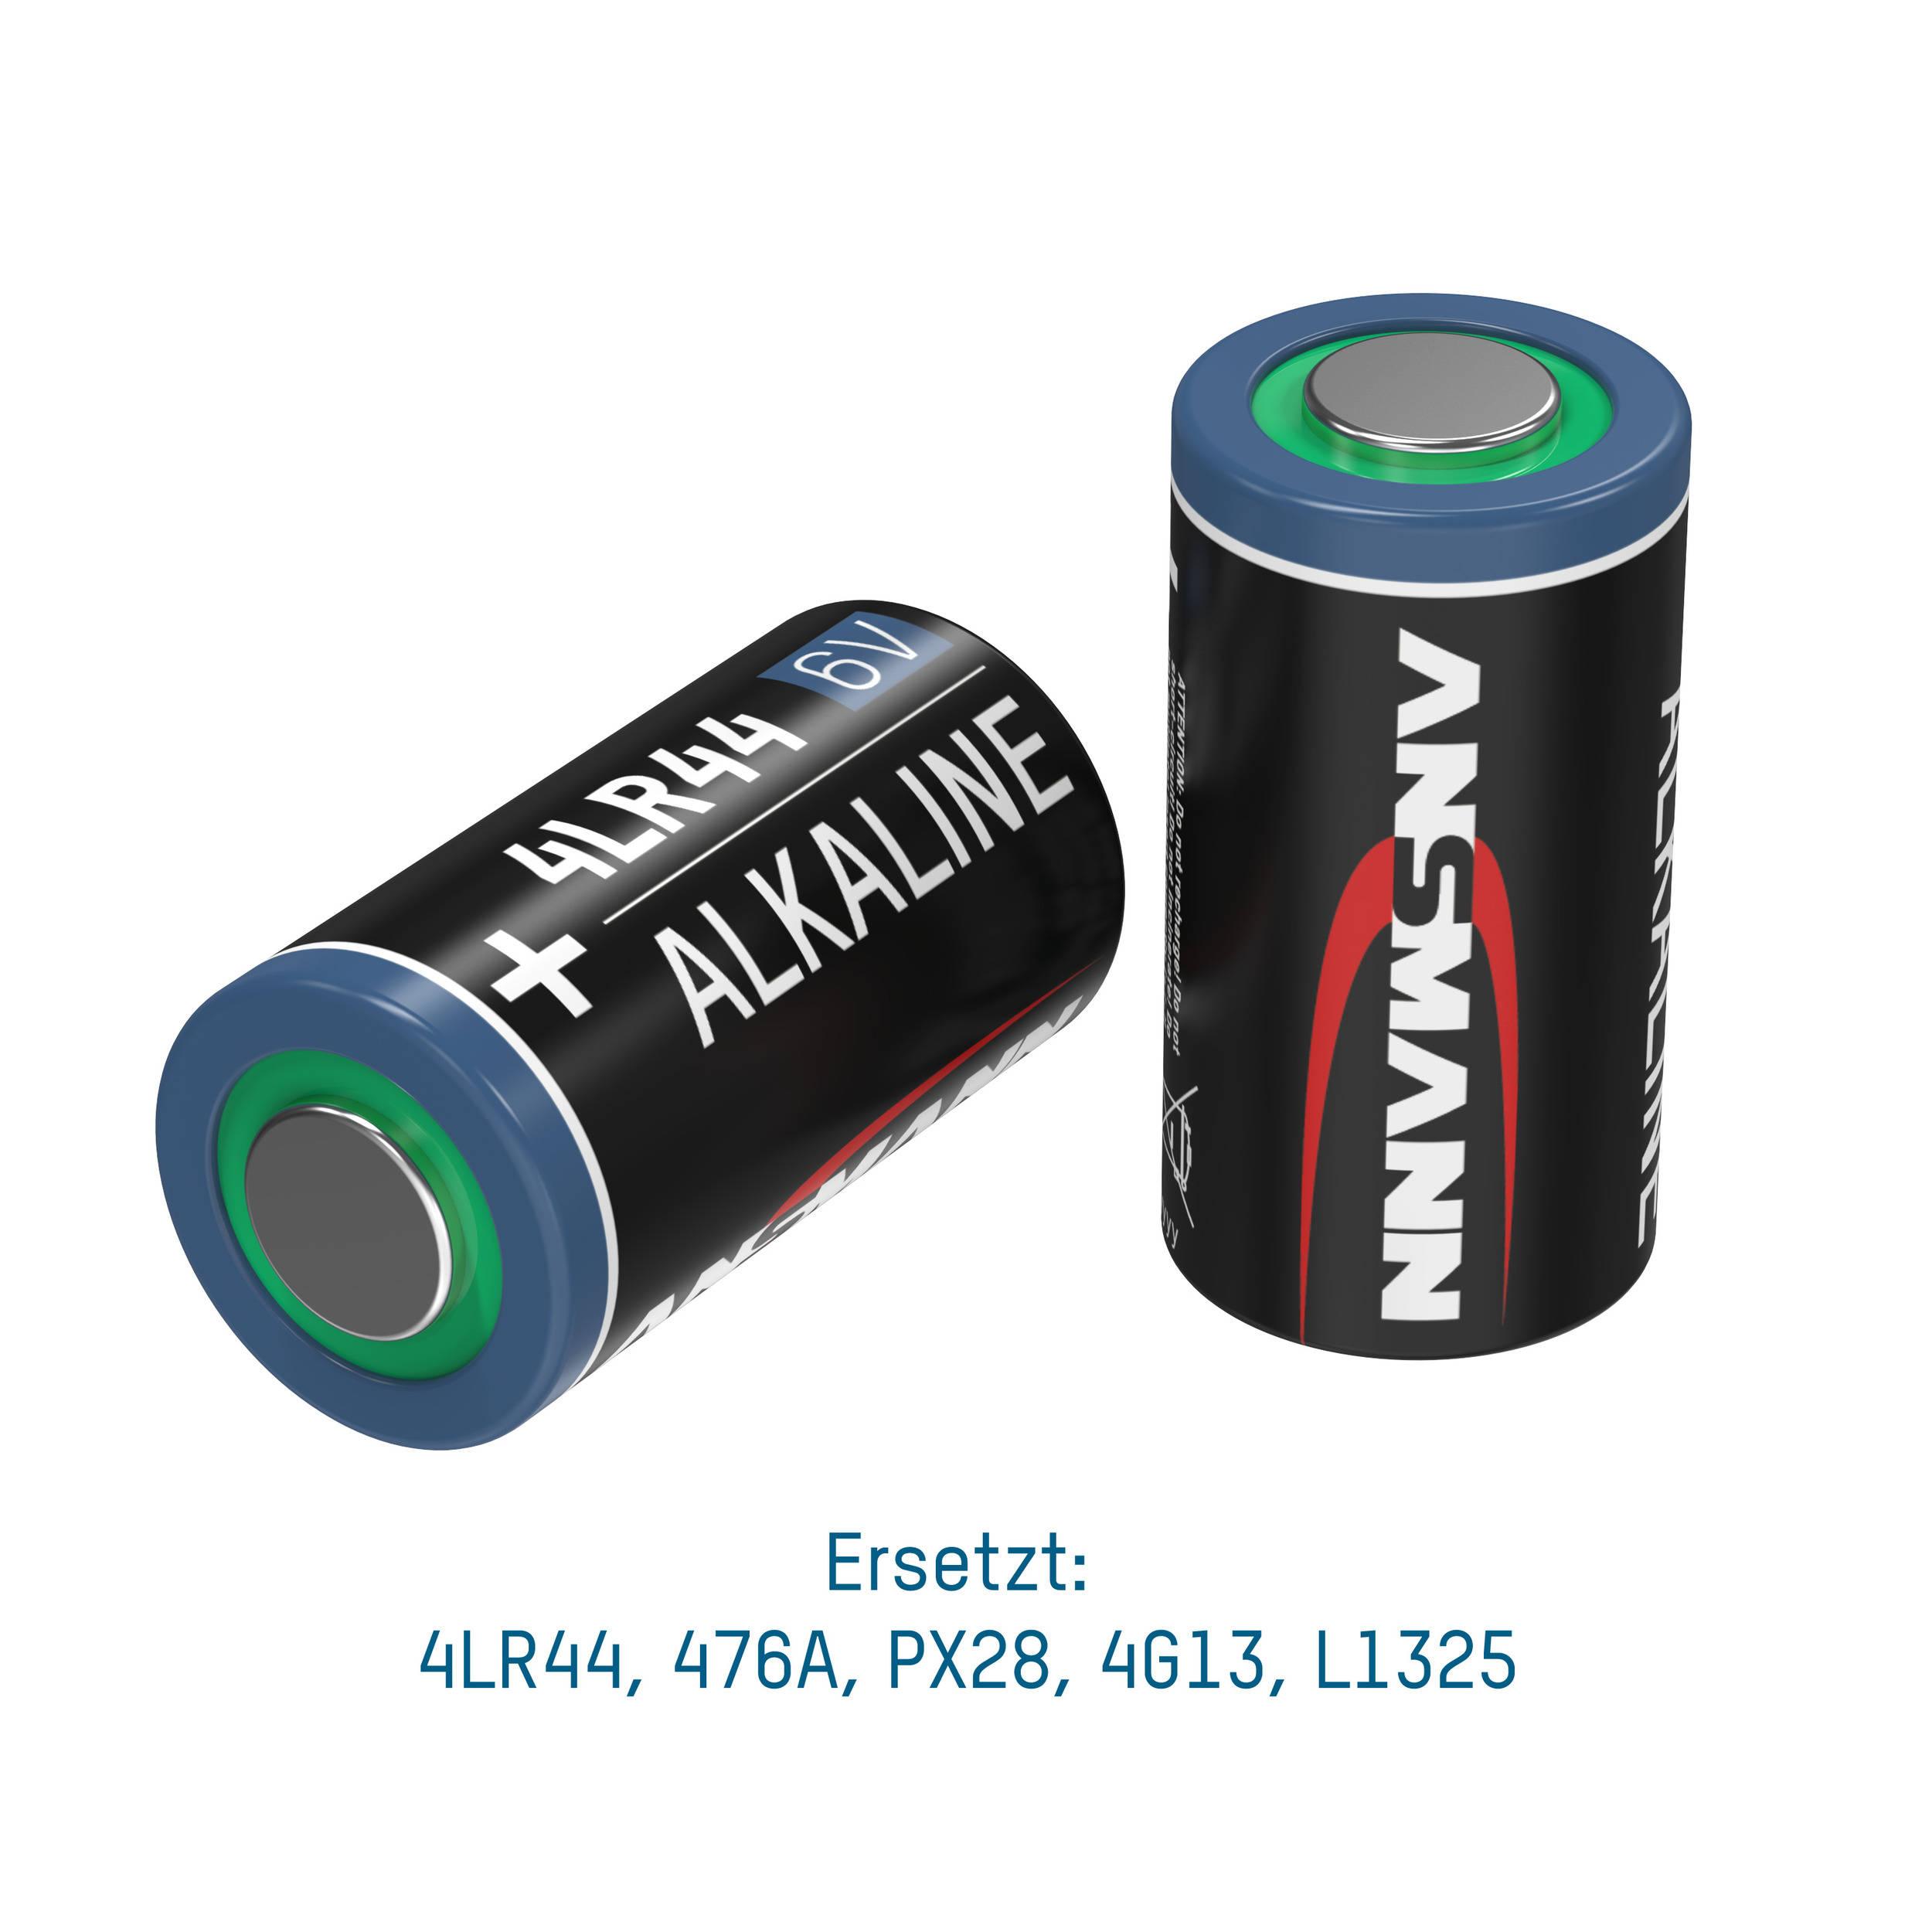 ANSMANN ANSMANN - 6V Volt 6 Spezialbatterien Alkaline Batterie, 4LR44 Spezialbatterie Batterie 8er Pack